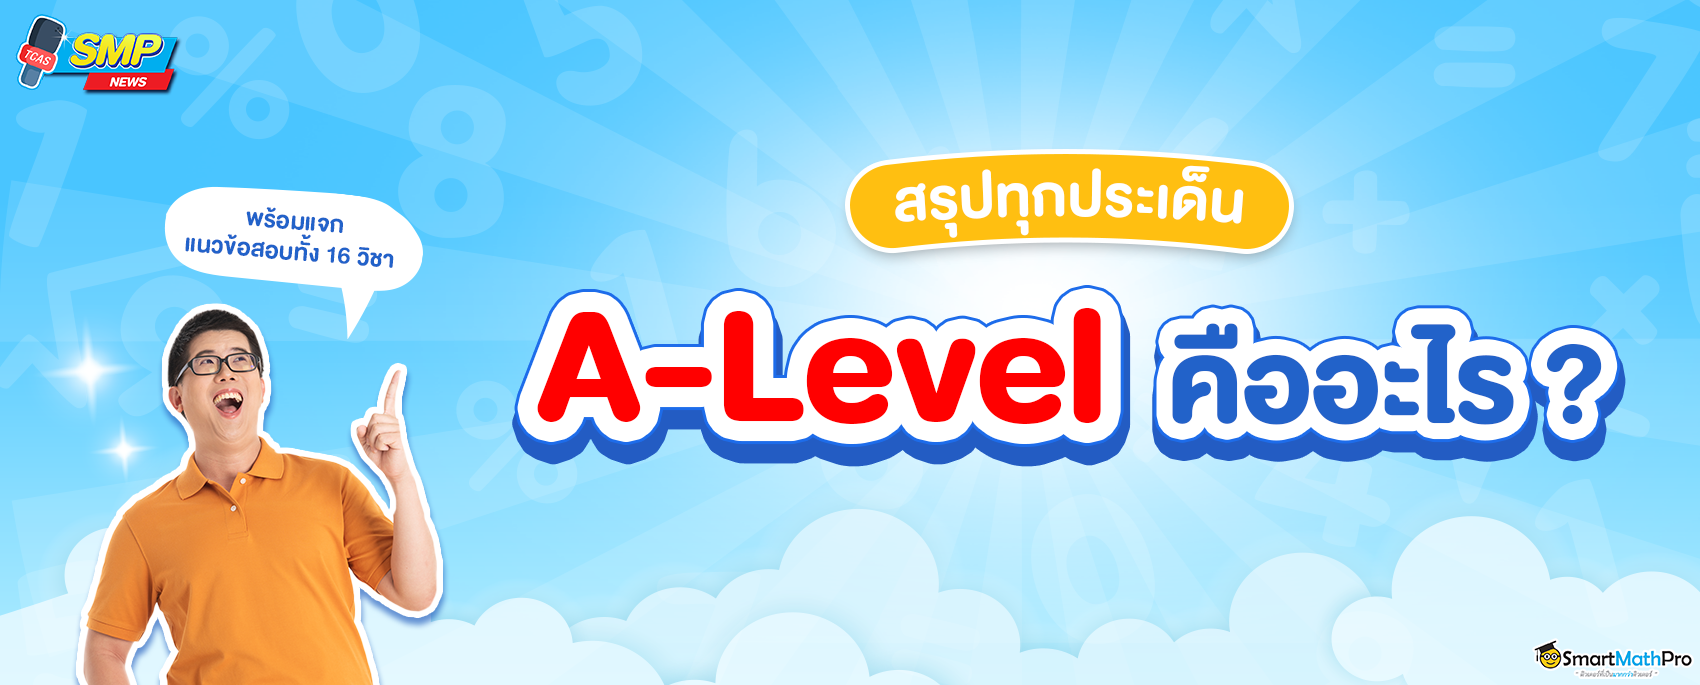 a level คืออะไร ? ทำไมต้องสอบ alevel ? ค่าสมัครสอบ alevel เท่าไหร่ ?